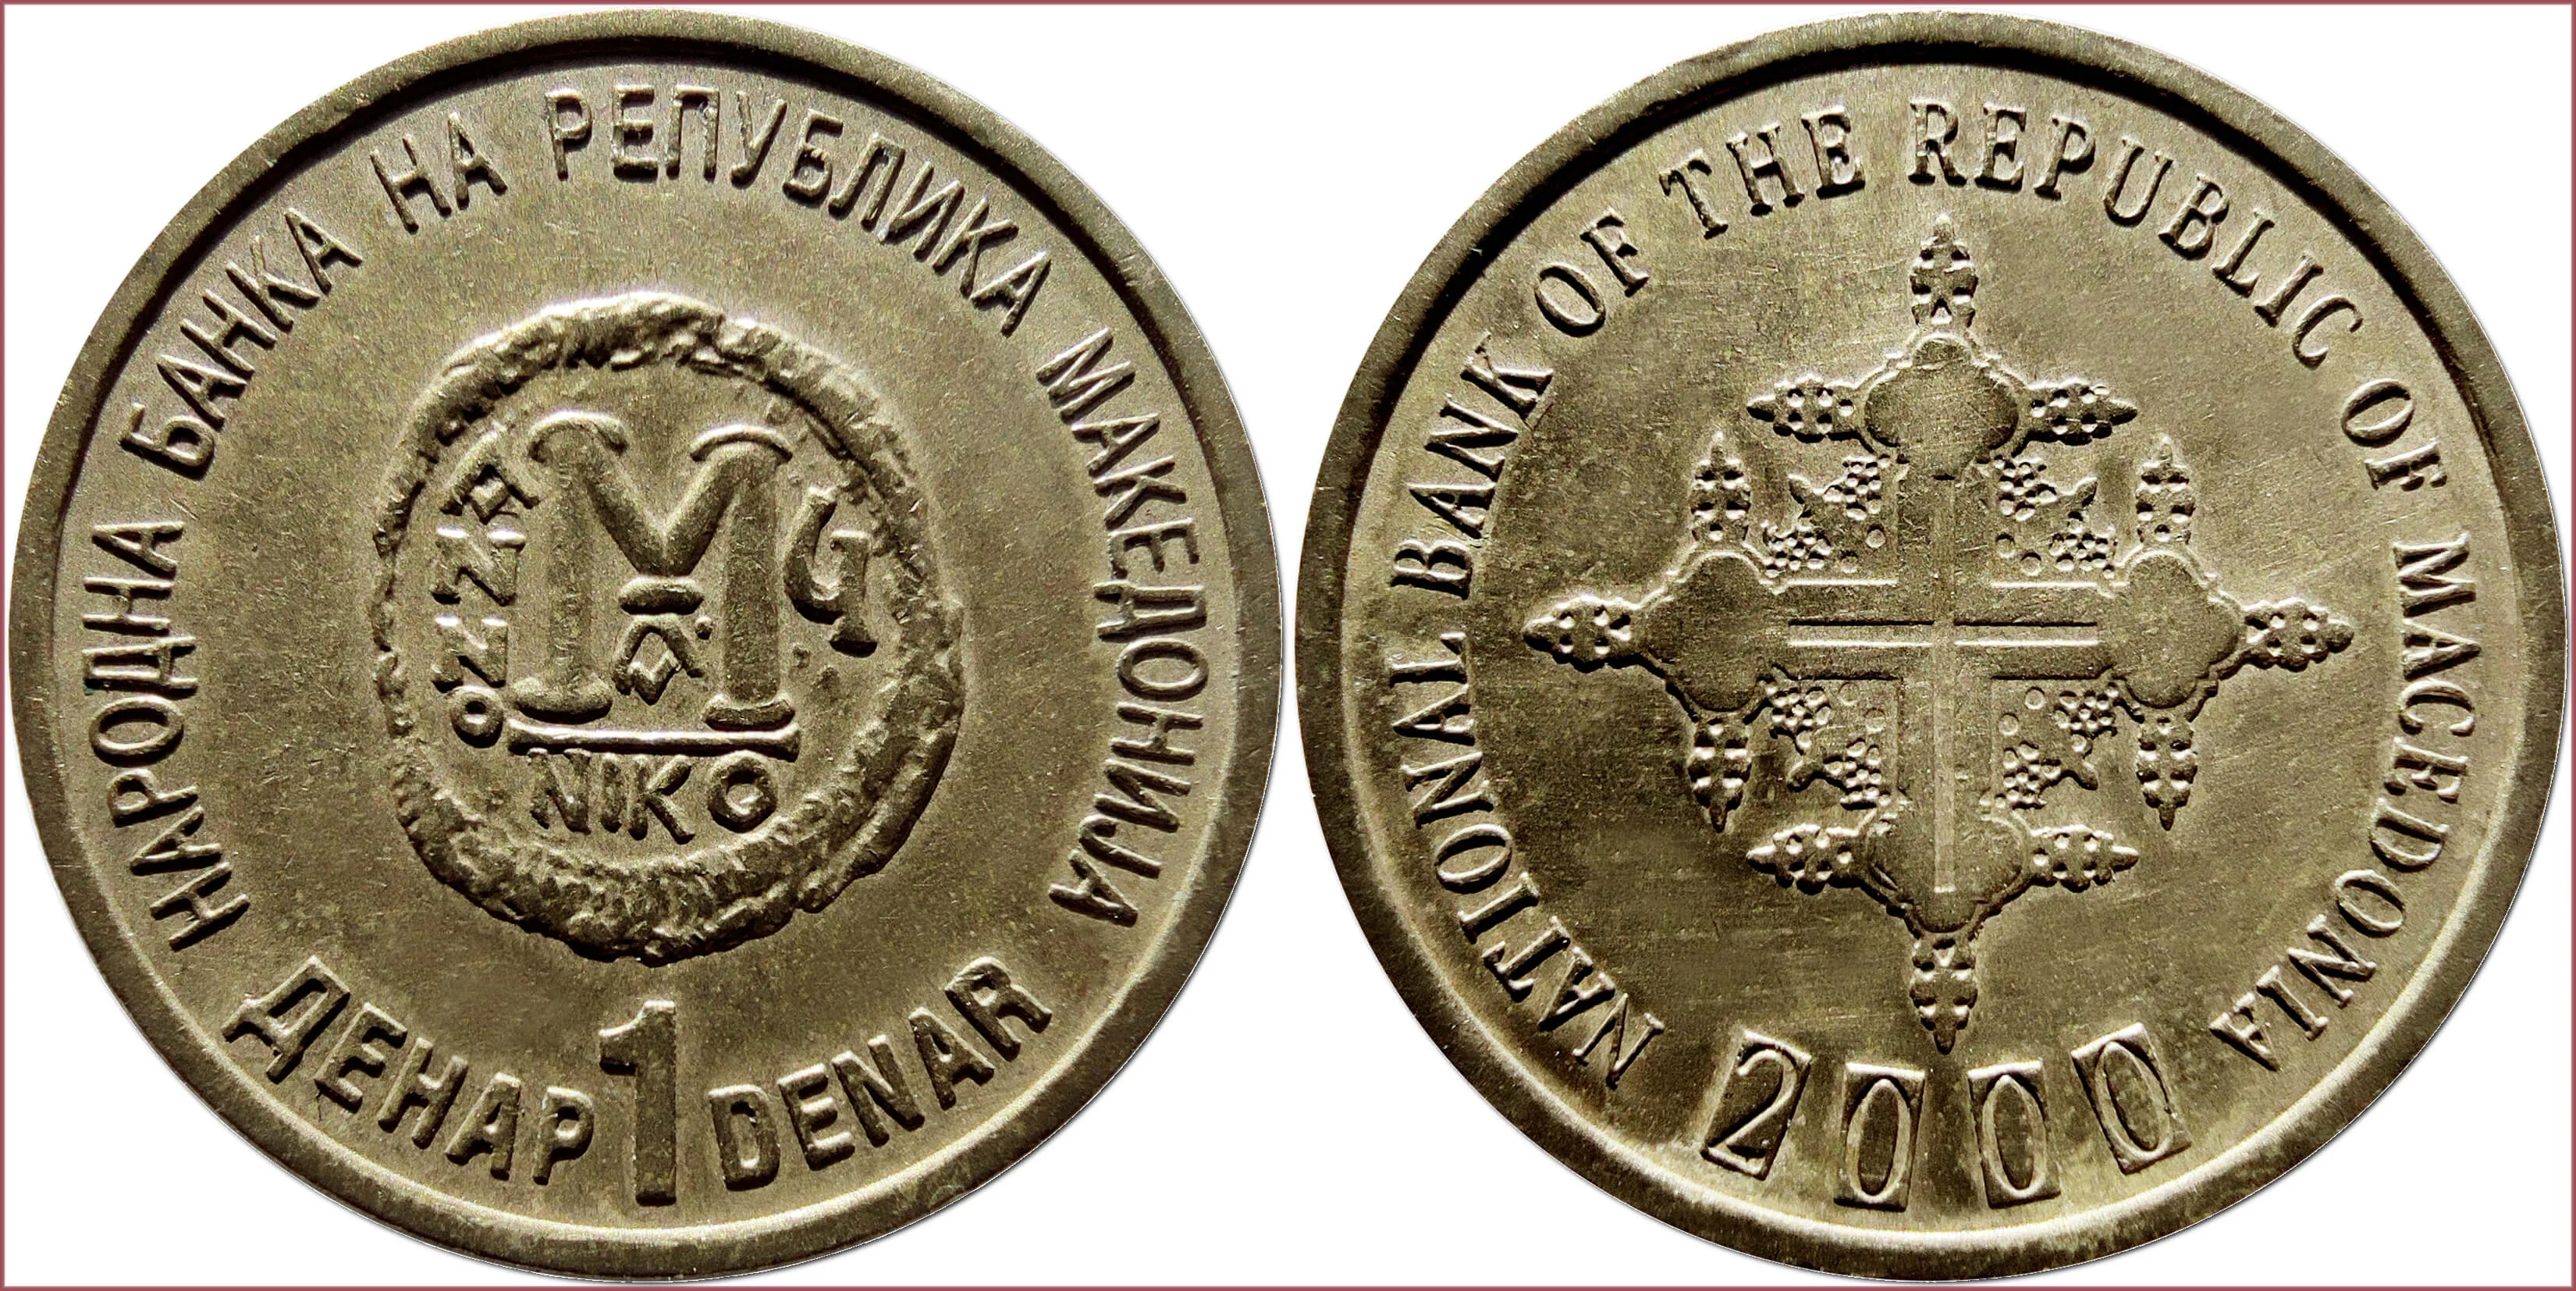 Denar: coin from Republic of Macedonia (1993-...); 100 deni